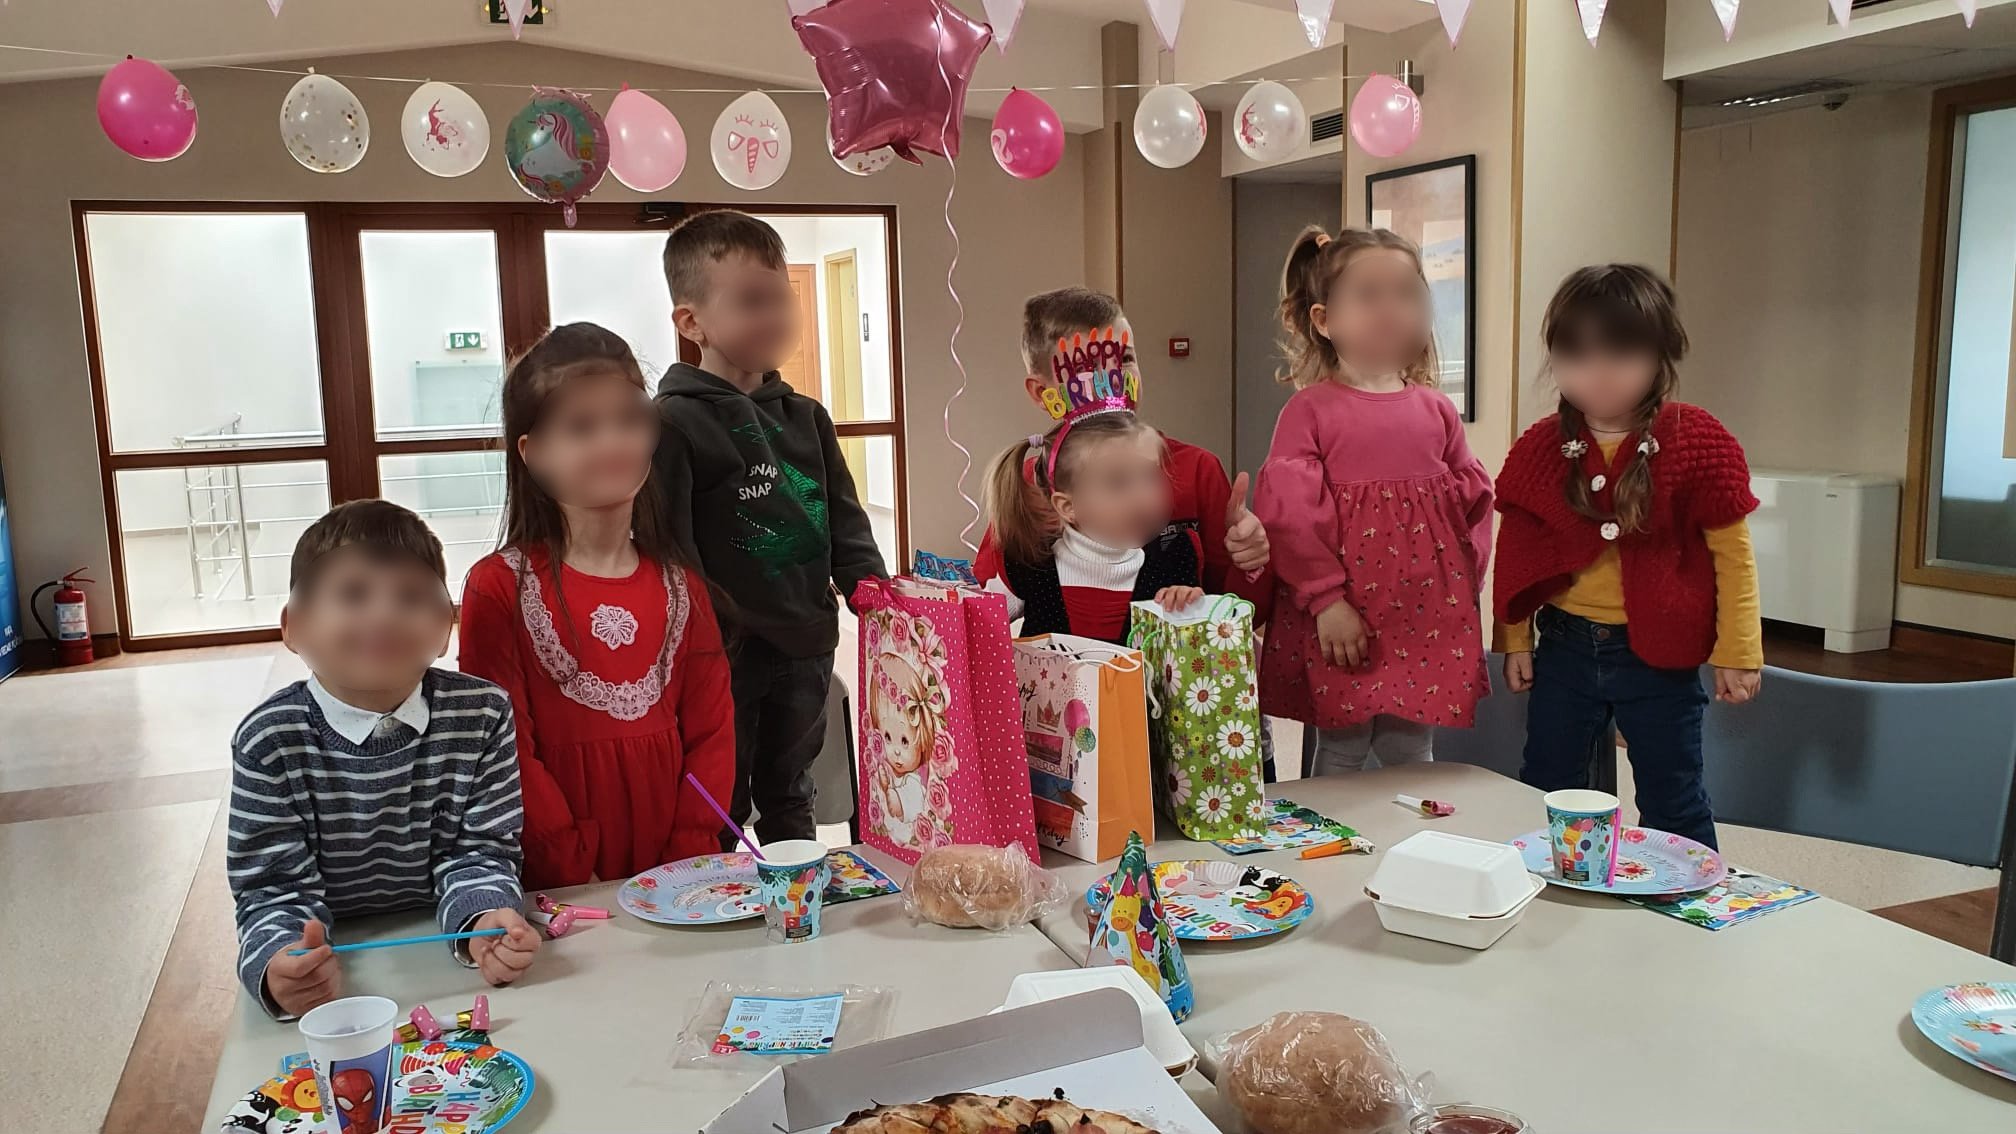 Birthday girl and kids at birthday party - C.jpeg